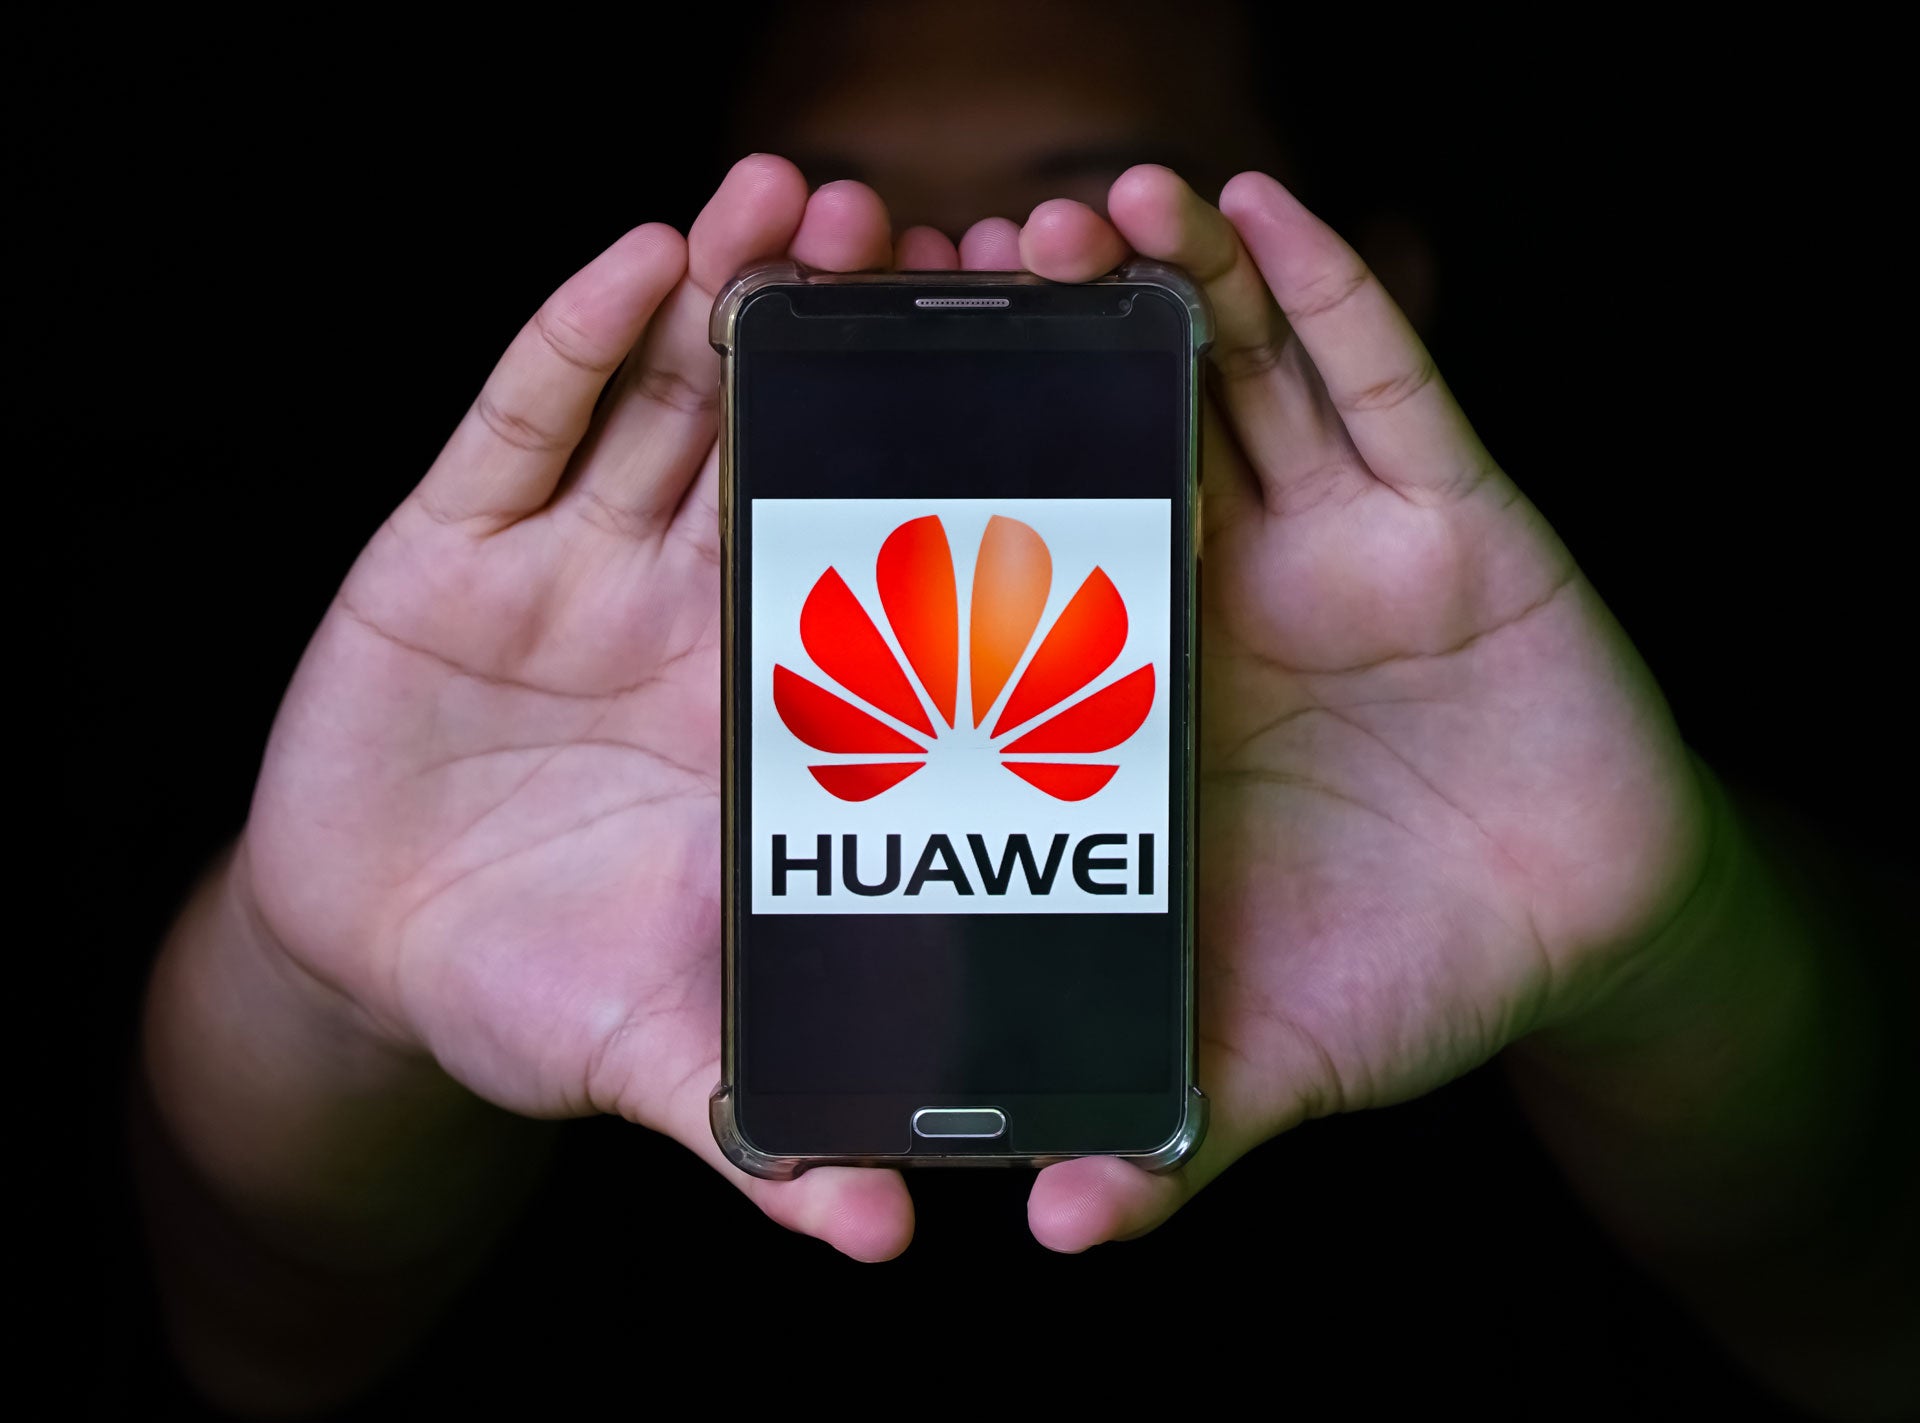 Huawei results